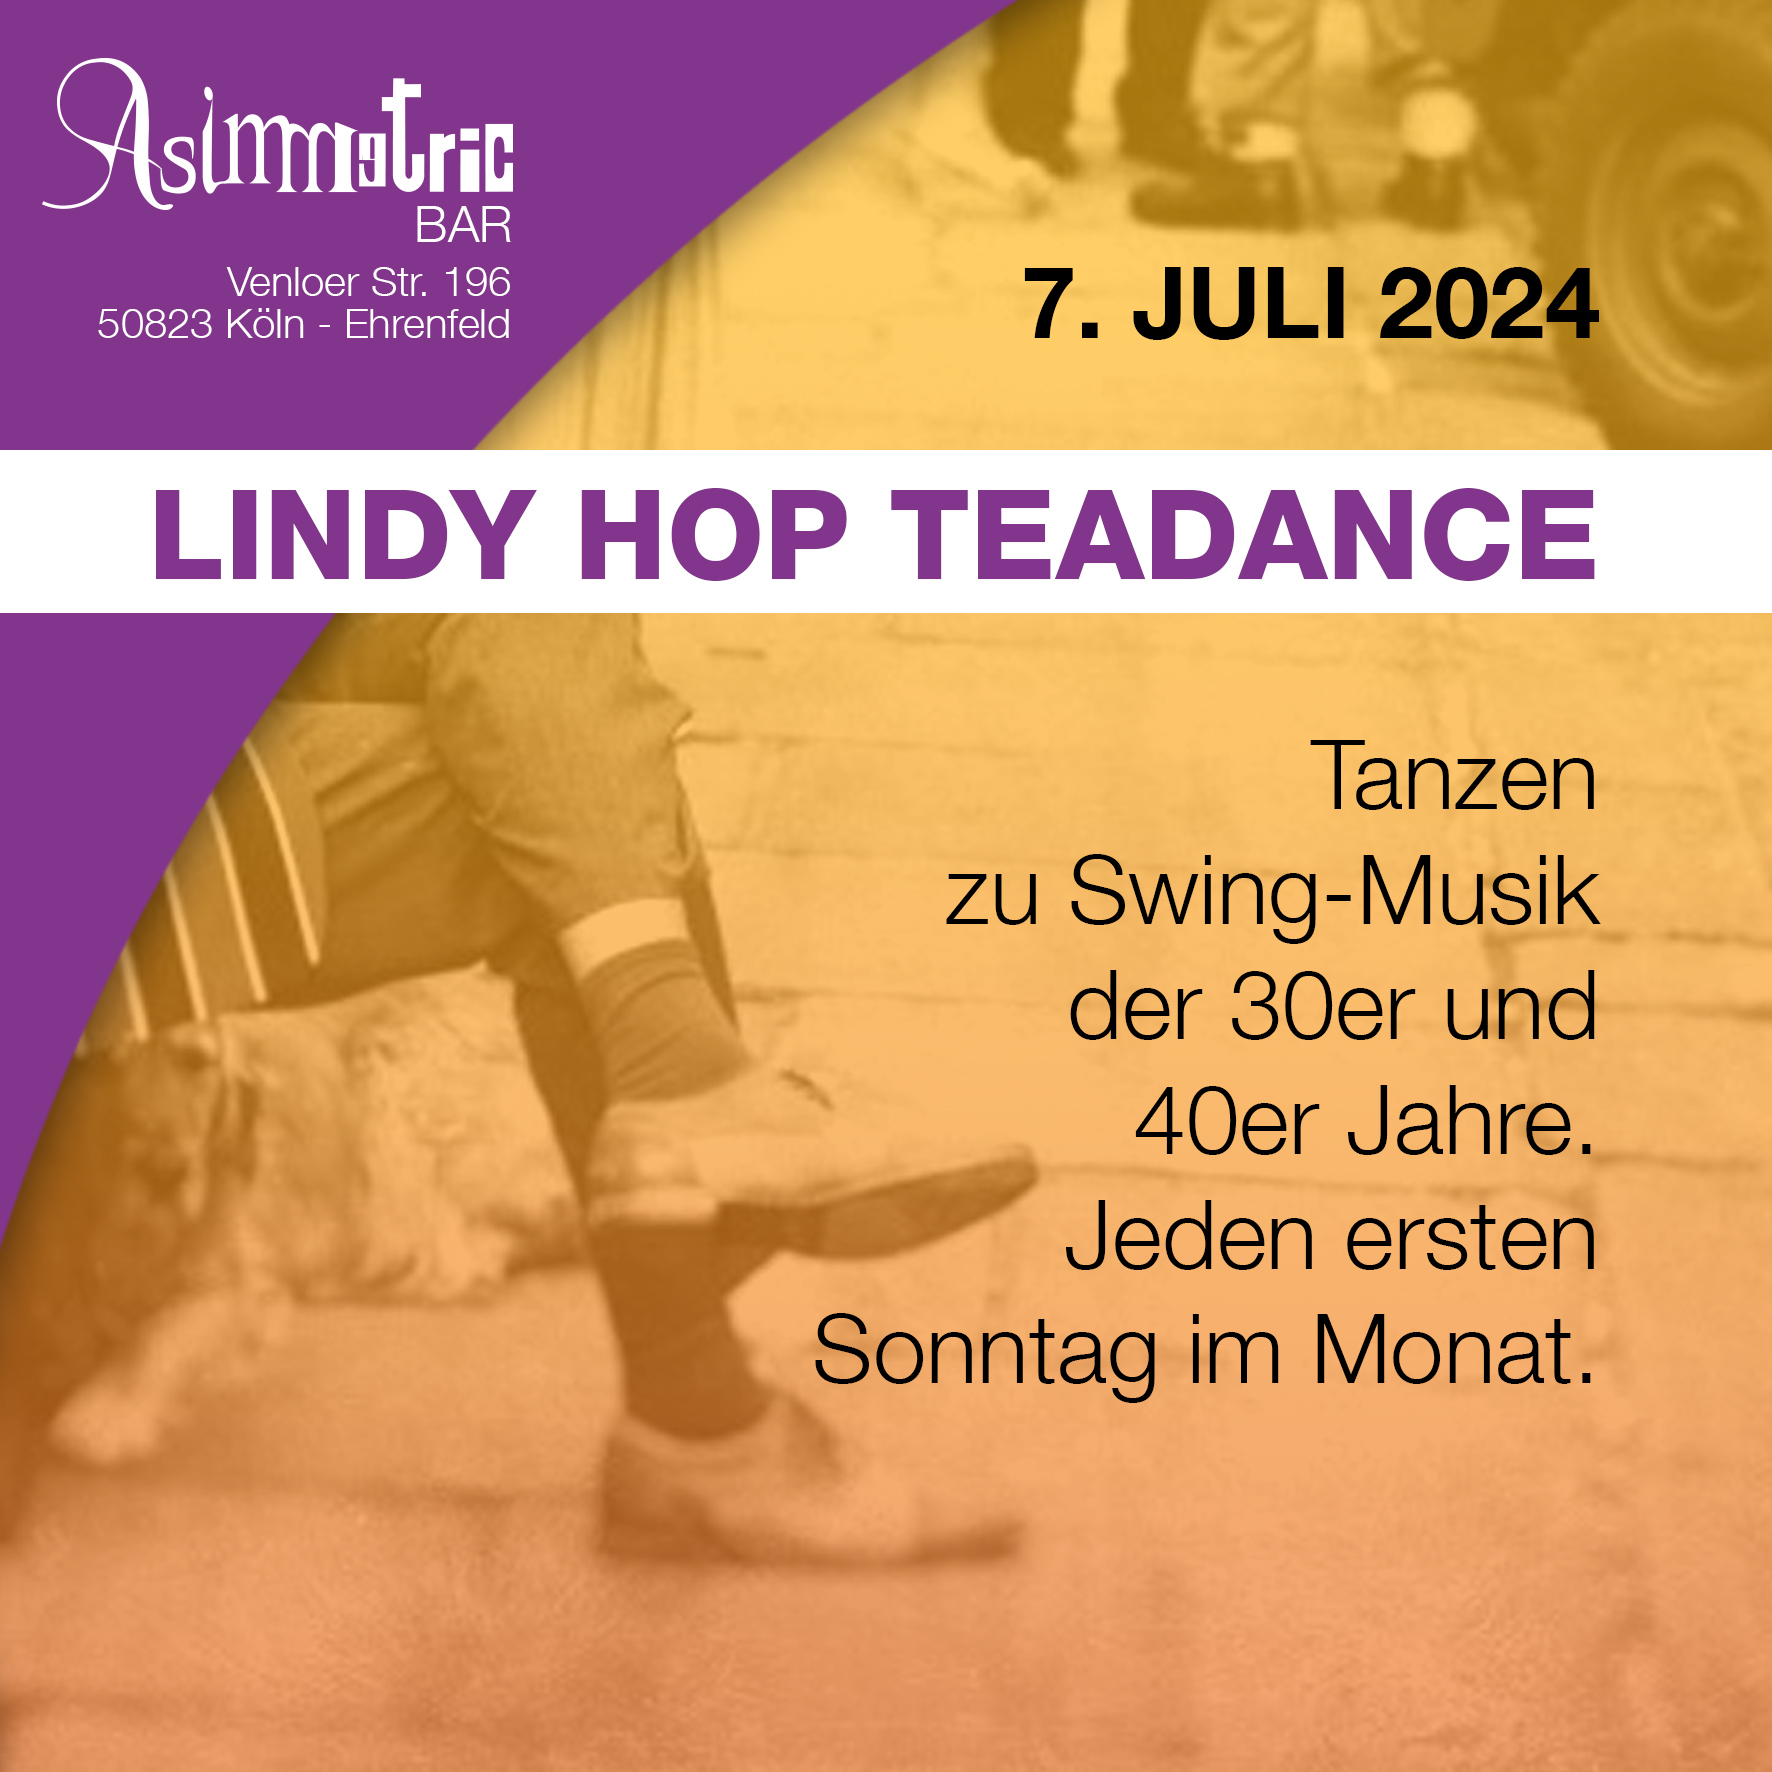 asimmetric bar * Venloer Str. 196 * 50823 Köln - Lindy Hop